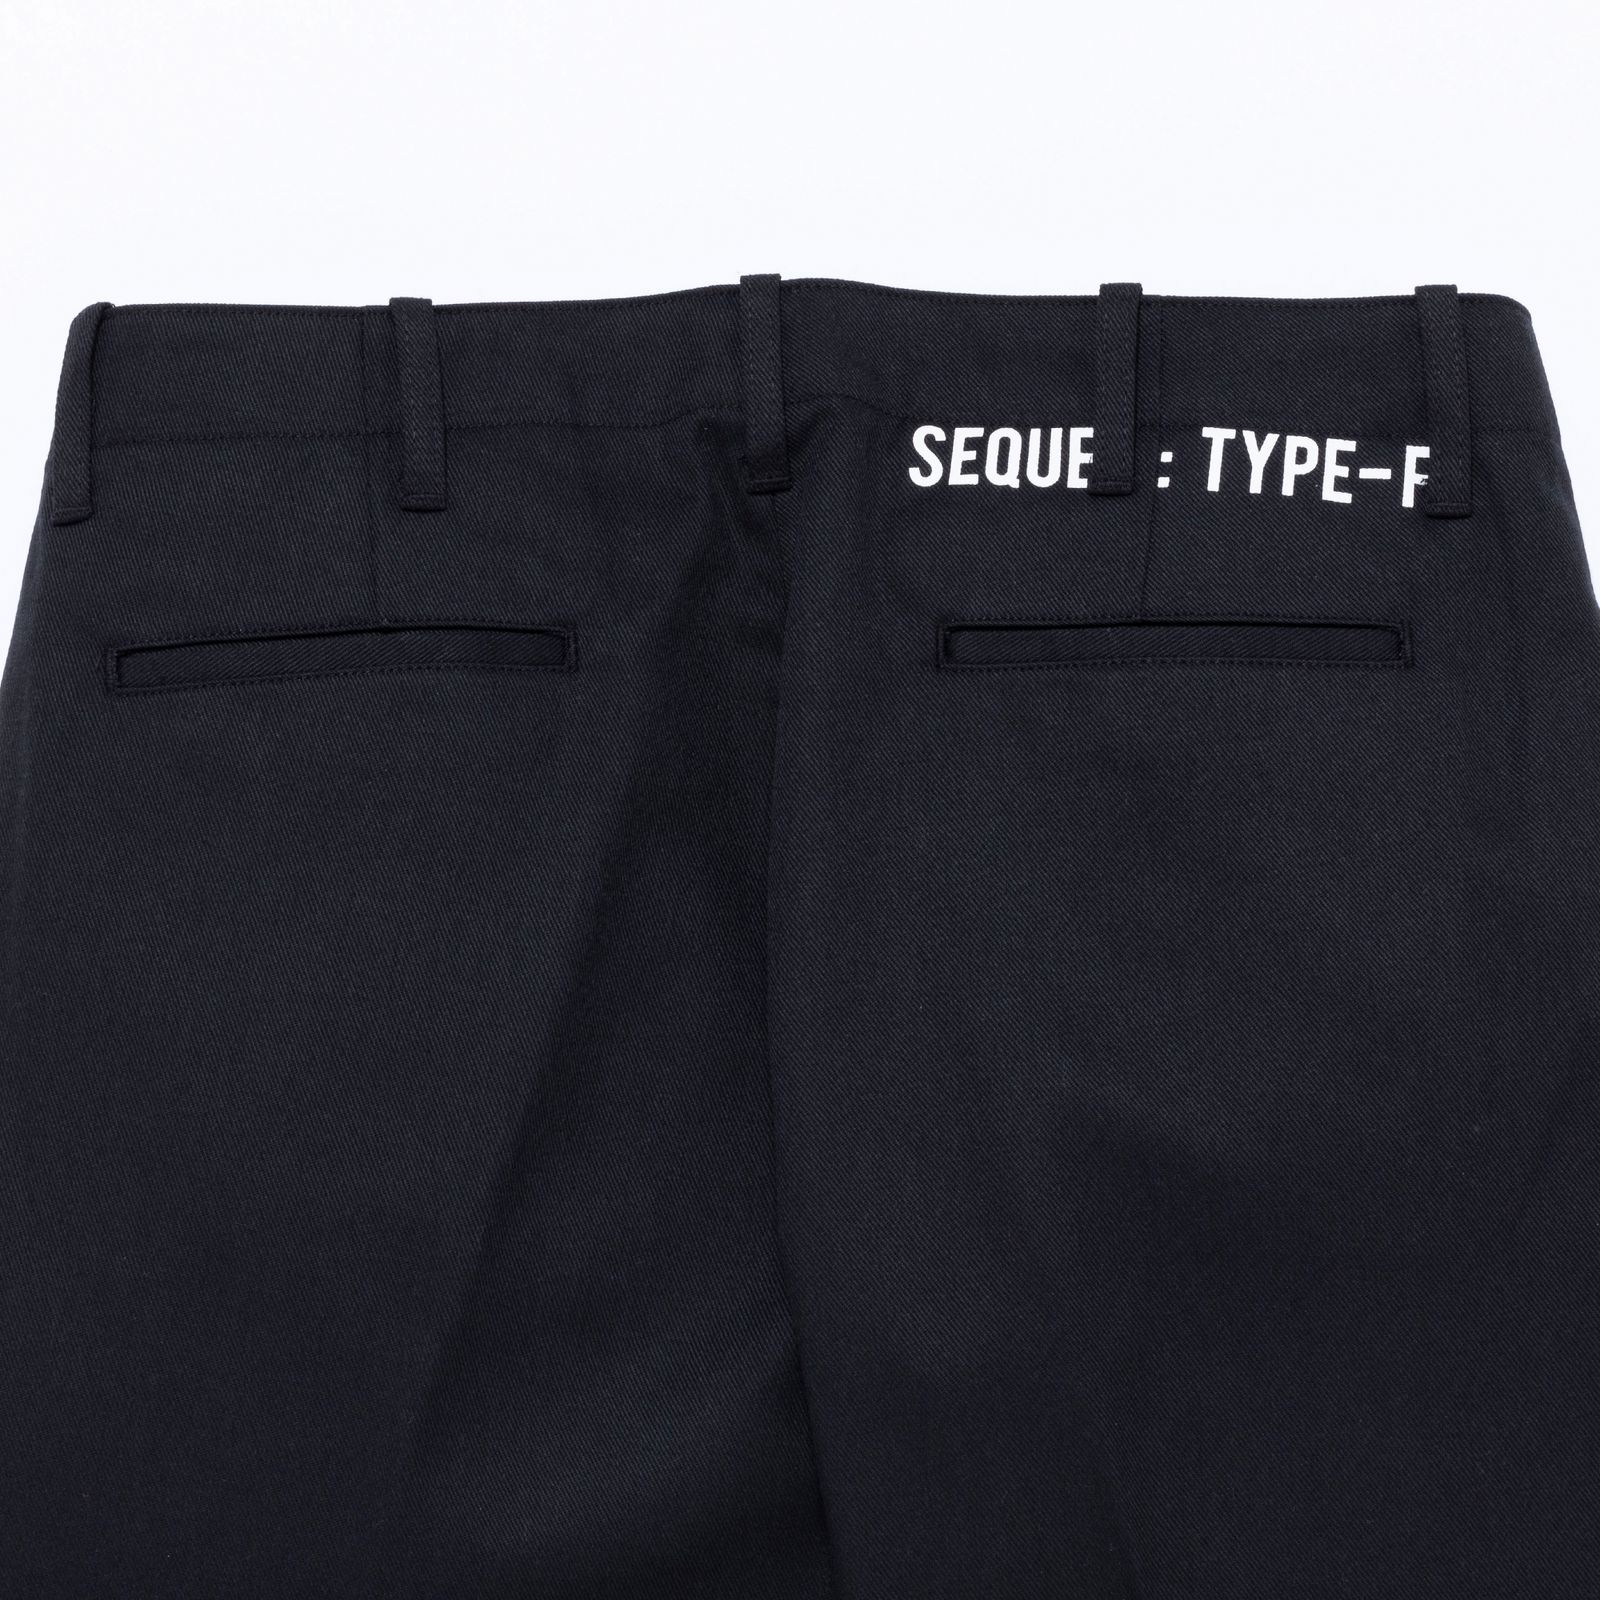 新品 SEQUEL CHINO PANTS (TYPE-F) BLACK Ｌ-